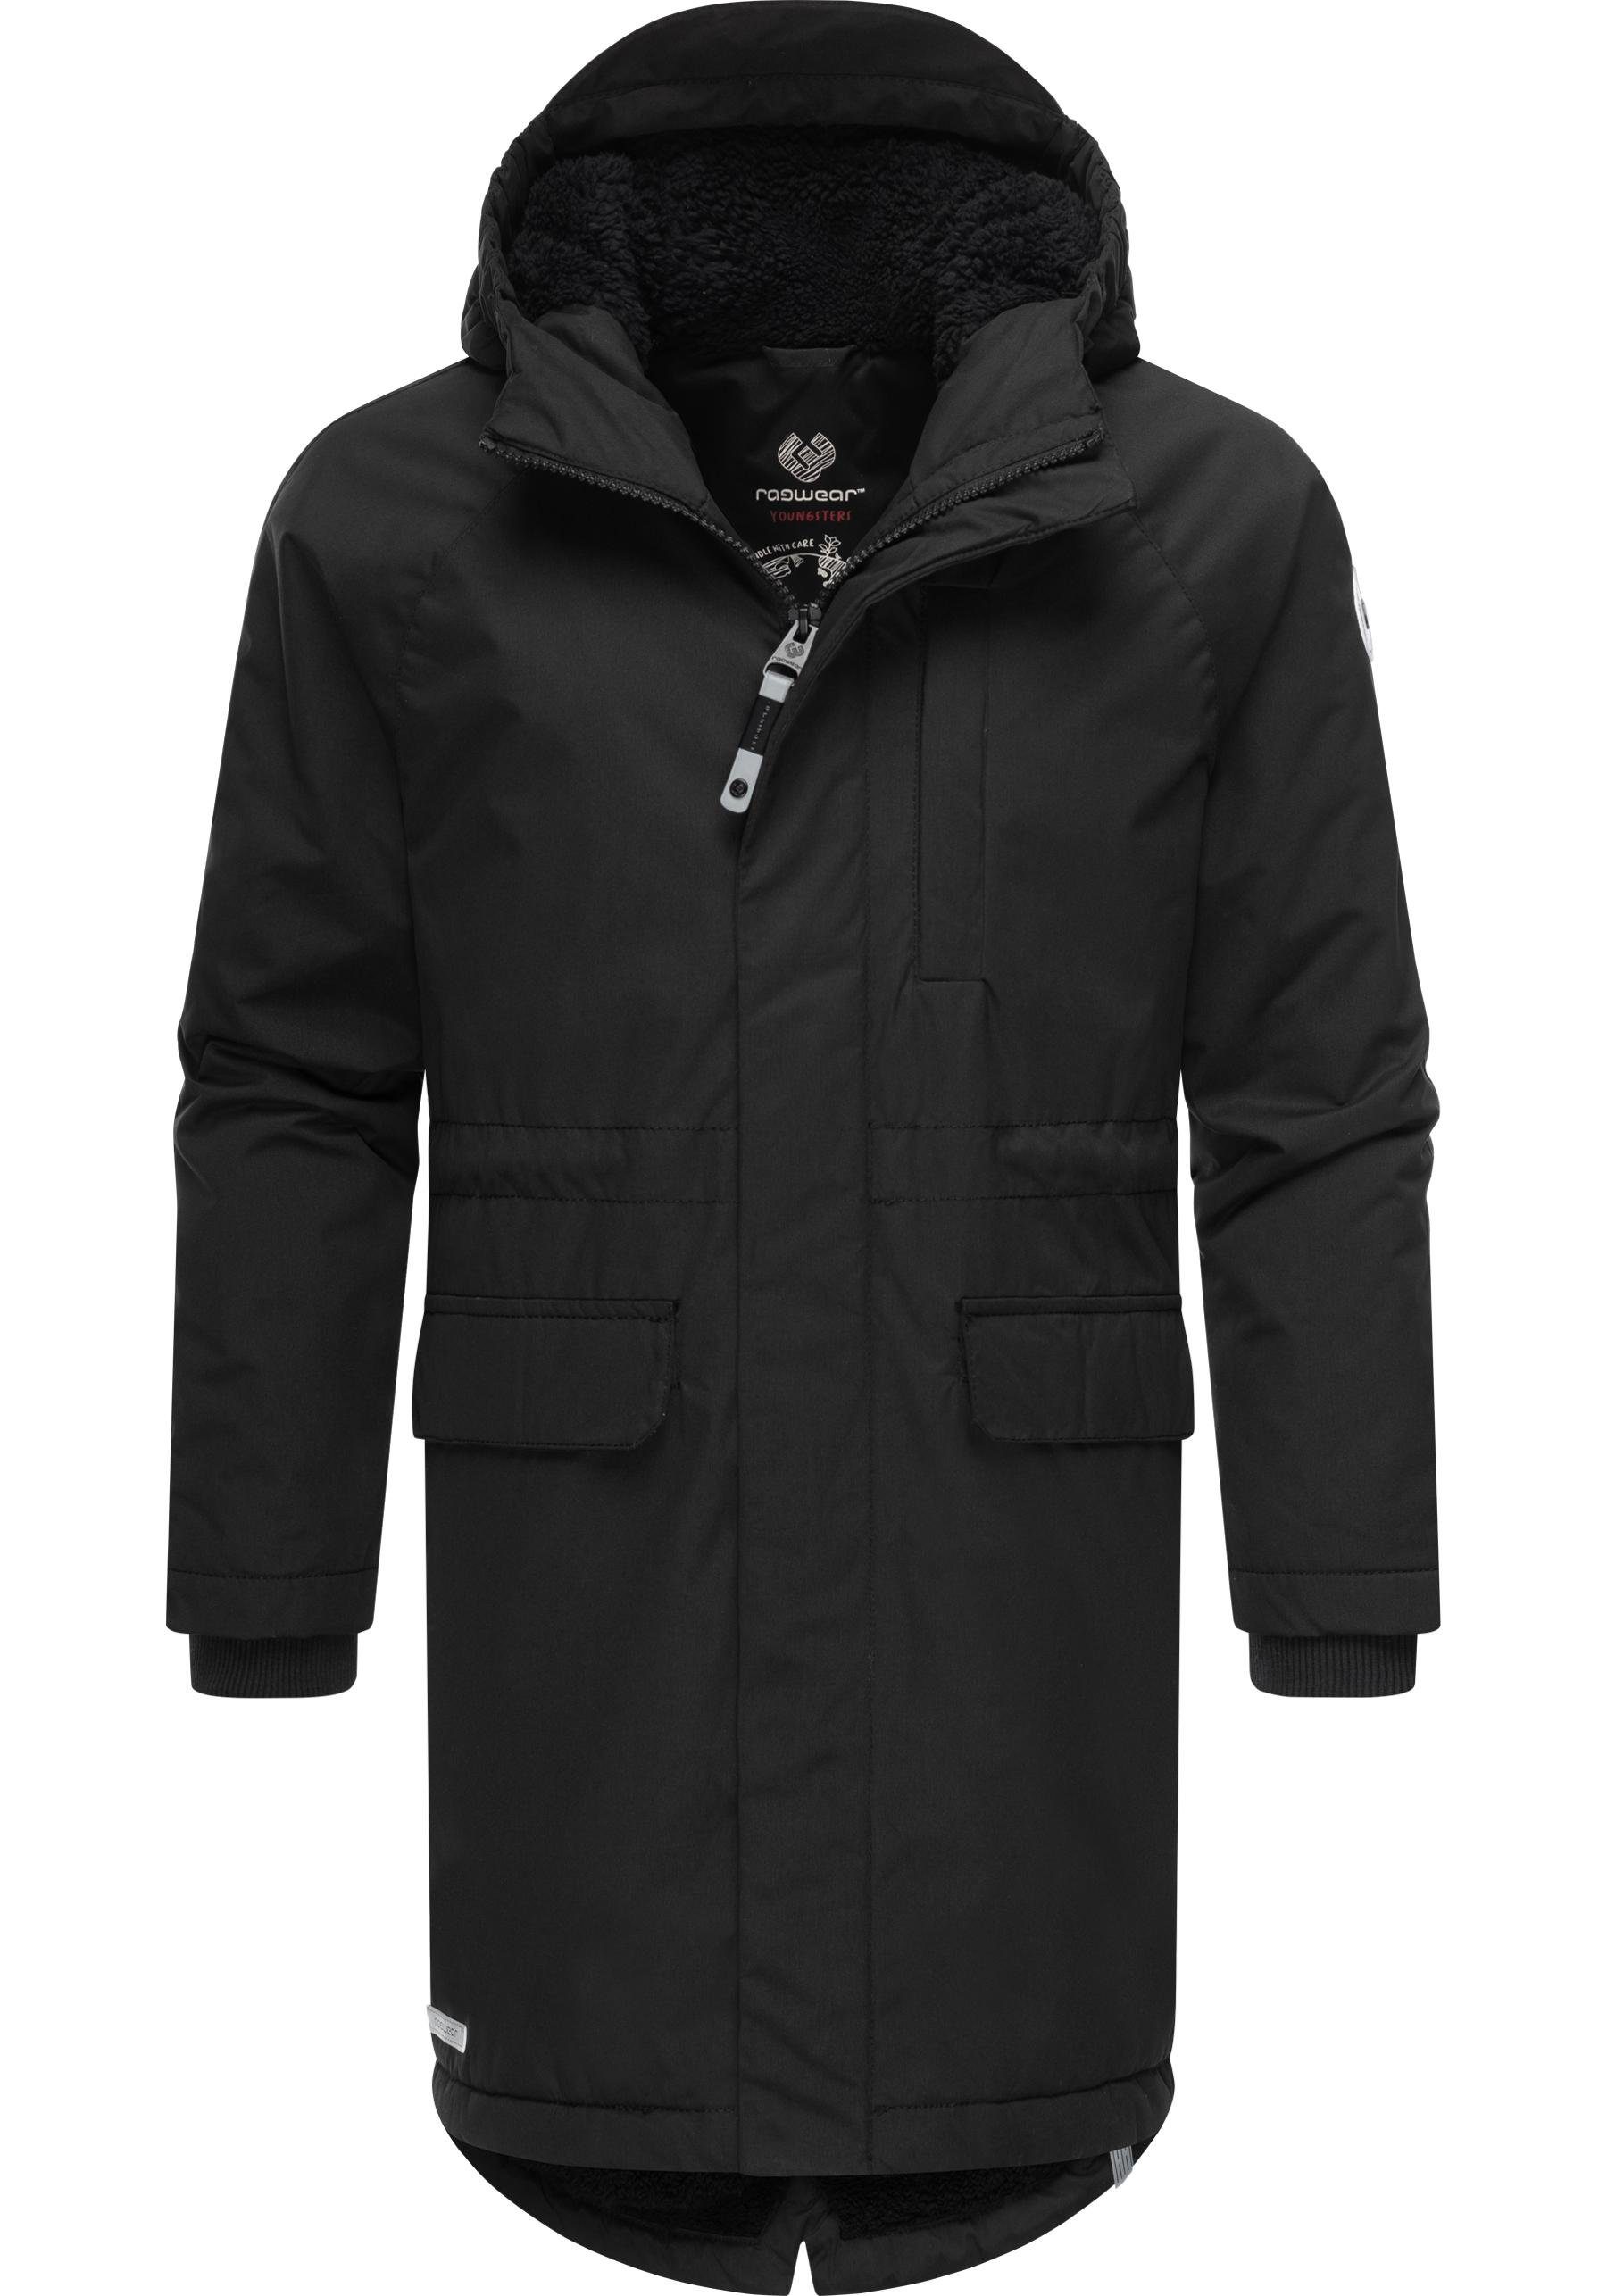 Teddyfell-Innenfutter Jacke schwarz mit flauschig Uniparka Winterjacke B warmem Ragwear